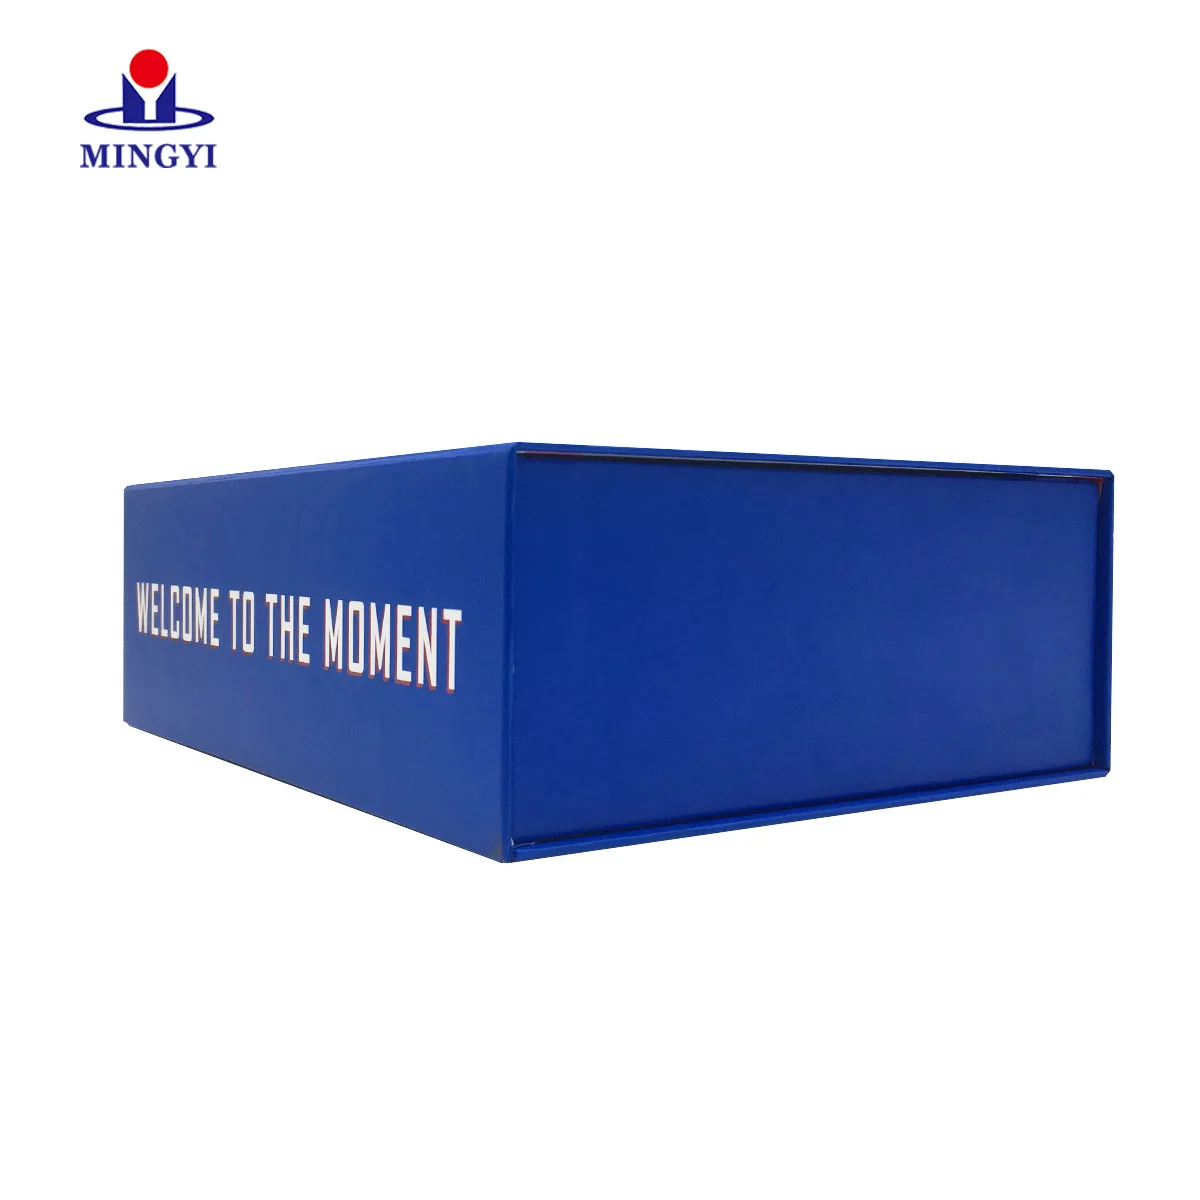 China Supplier Custom Handmade Gift Box for Scarf Dress T shirt Rigid Cardboard Paper Box Beautiful  Gift Box Packaging